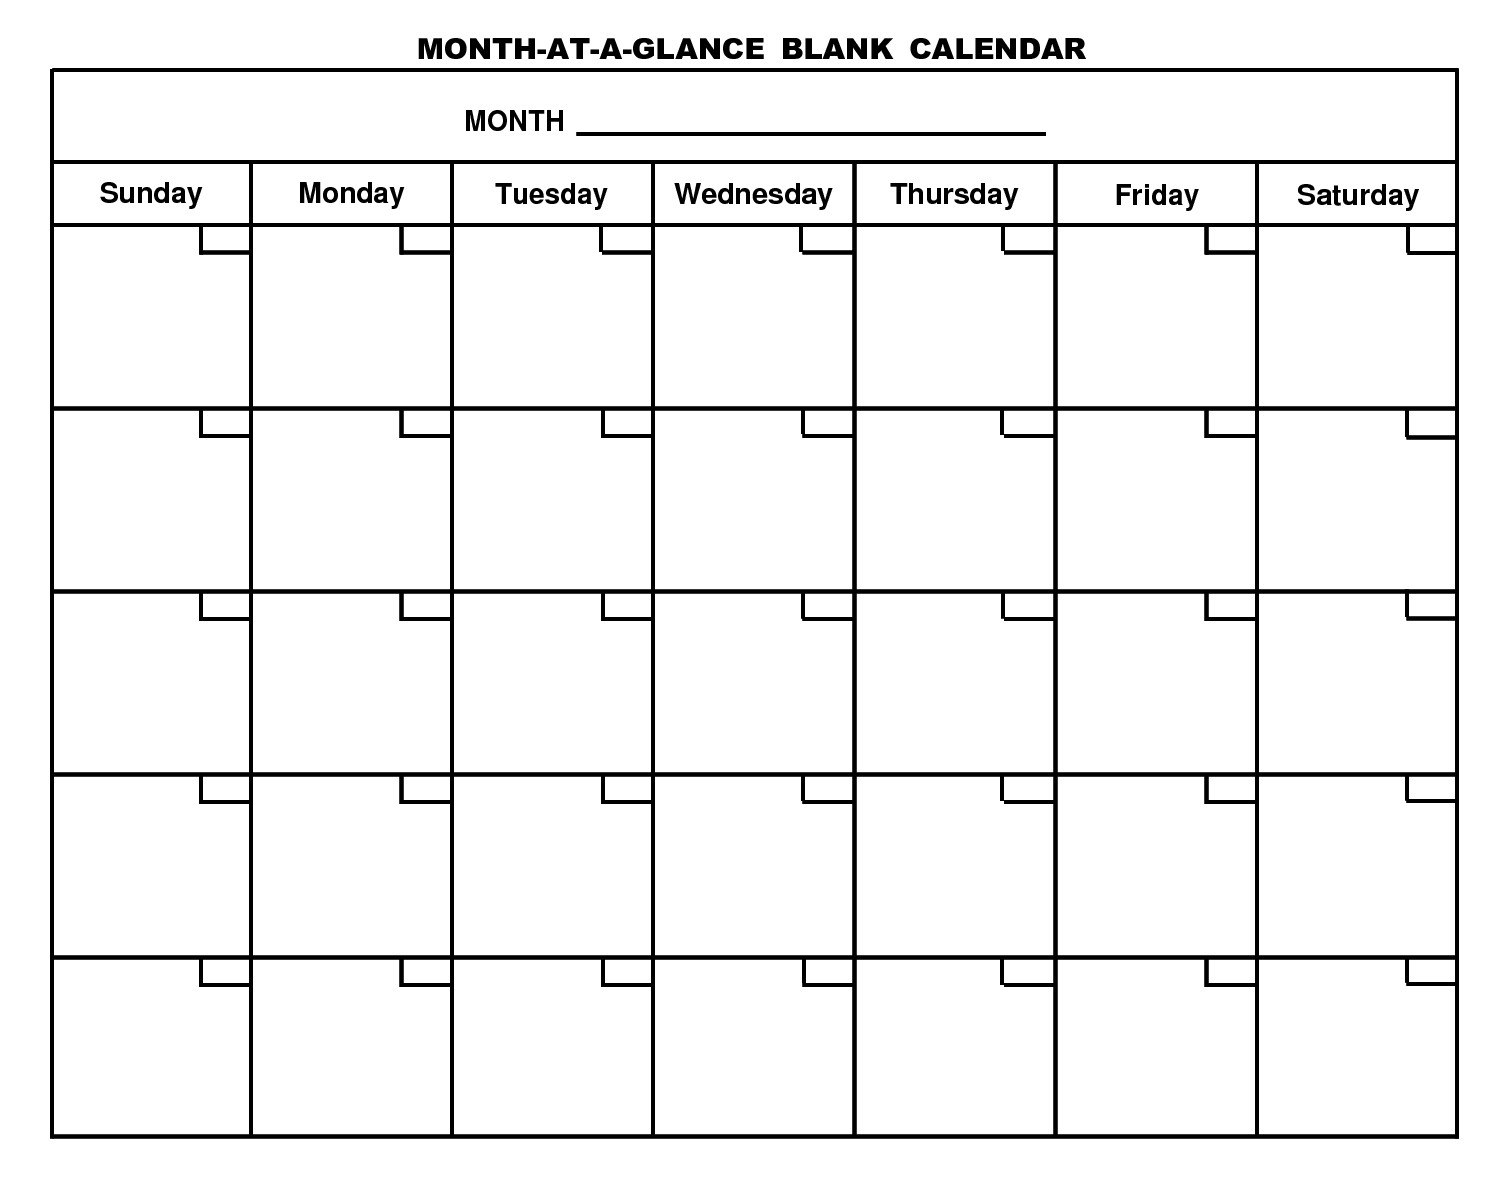 Free Printable Monthly Calendar Templates - Free Calendar-Printable Monthly At A Glance Calendar